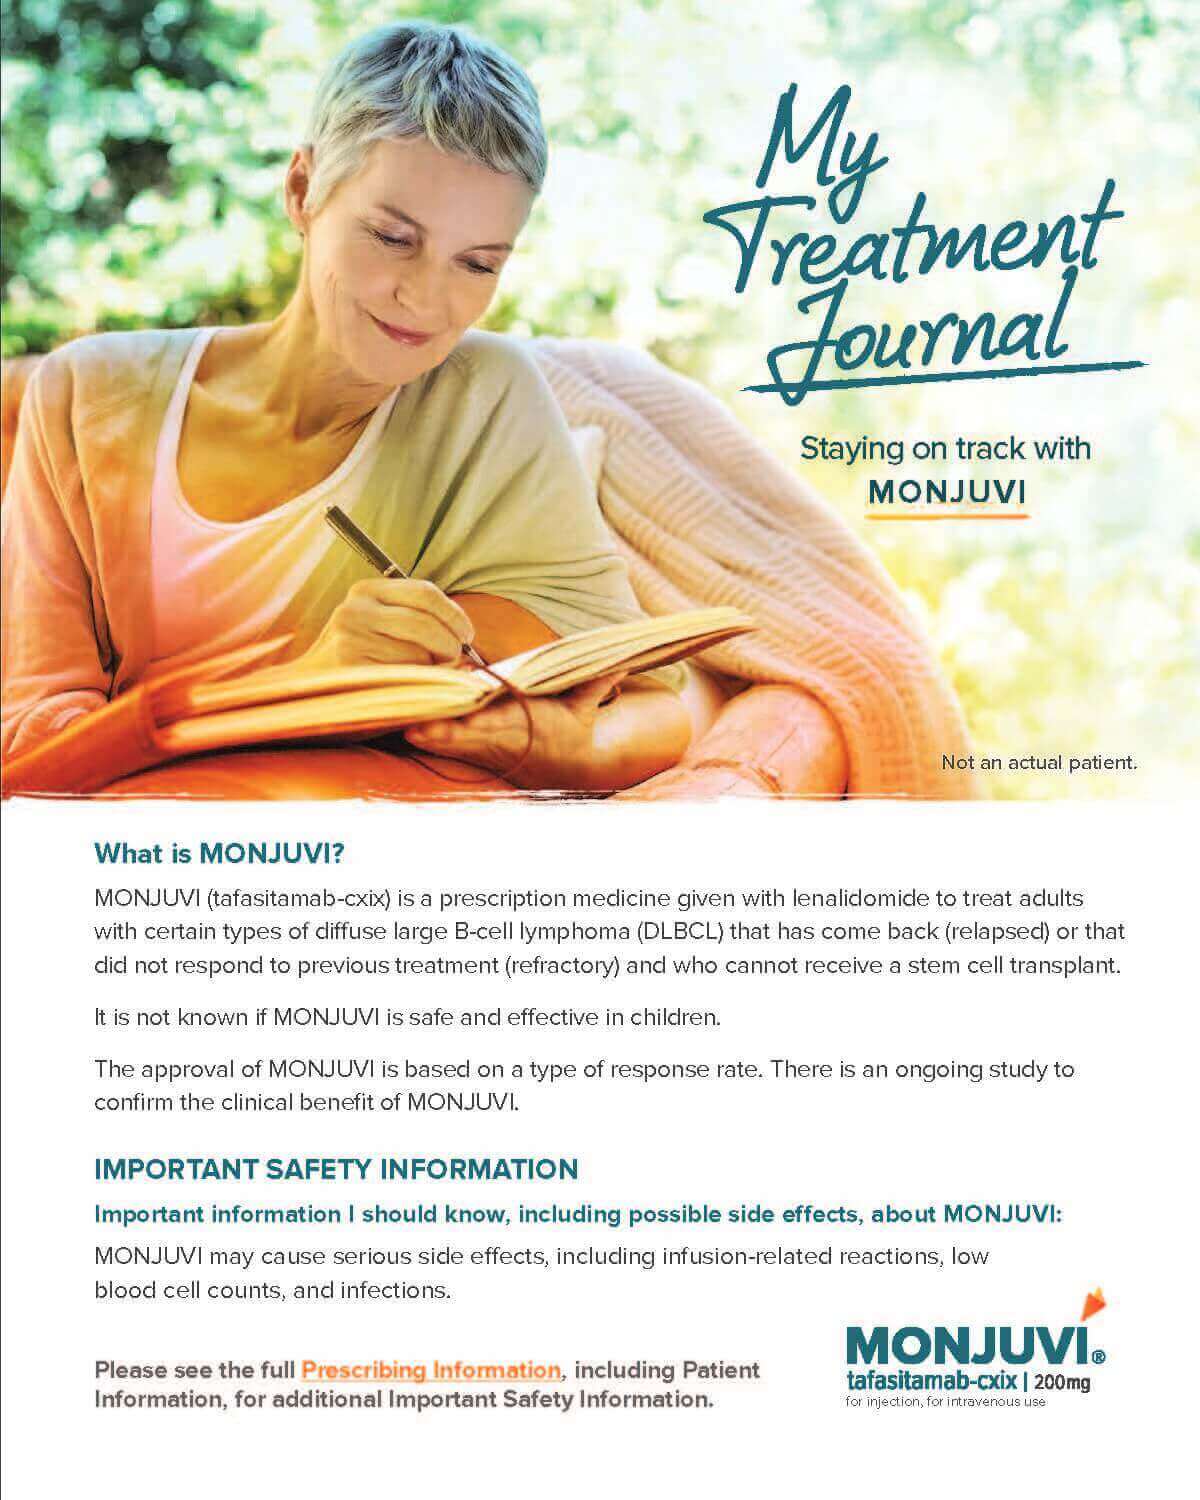 MONJUVI Treatment Journal